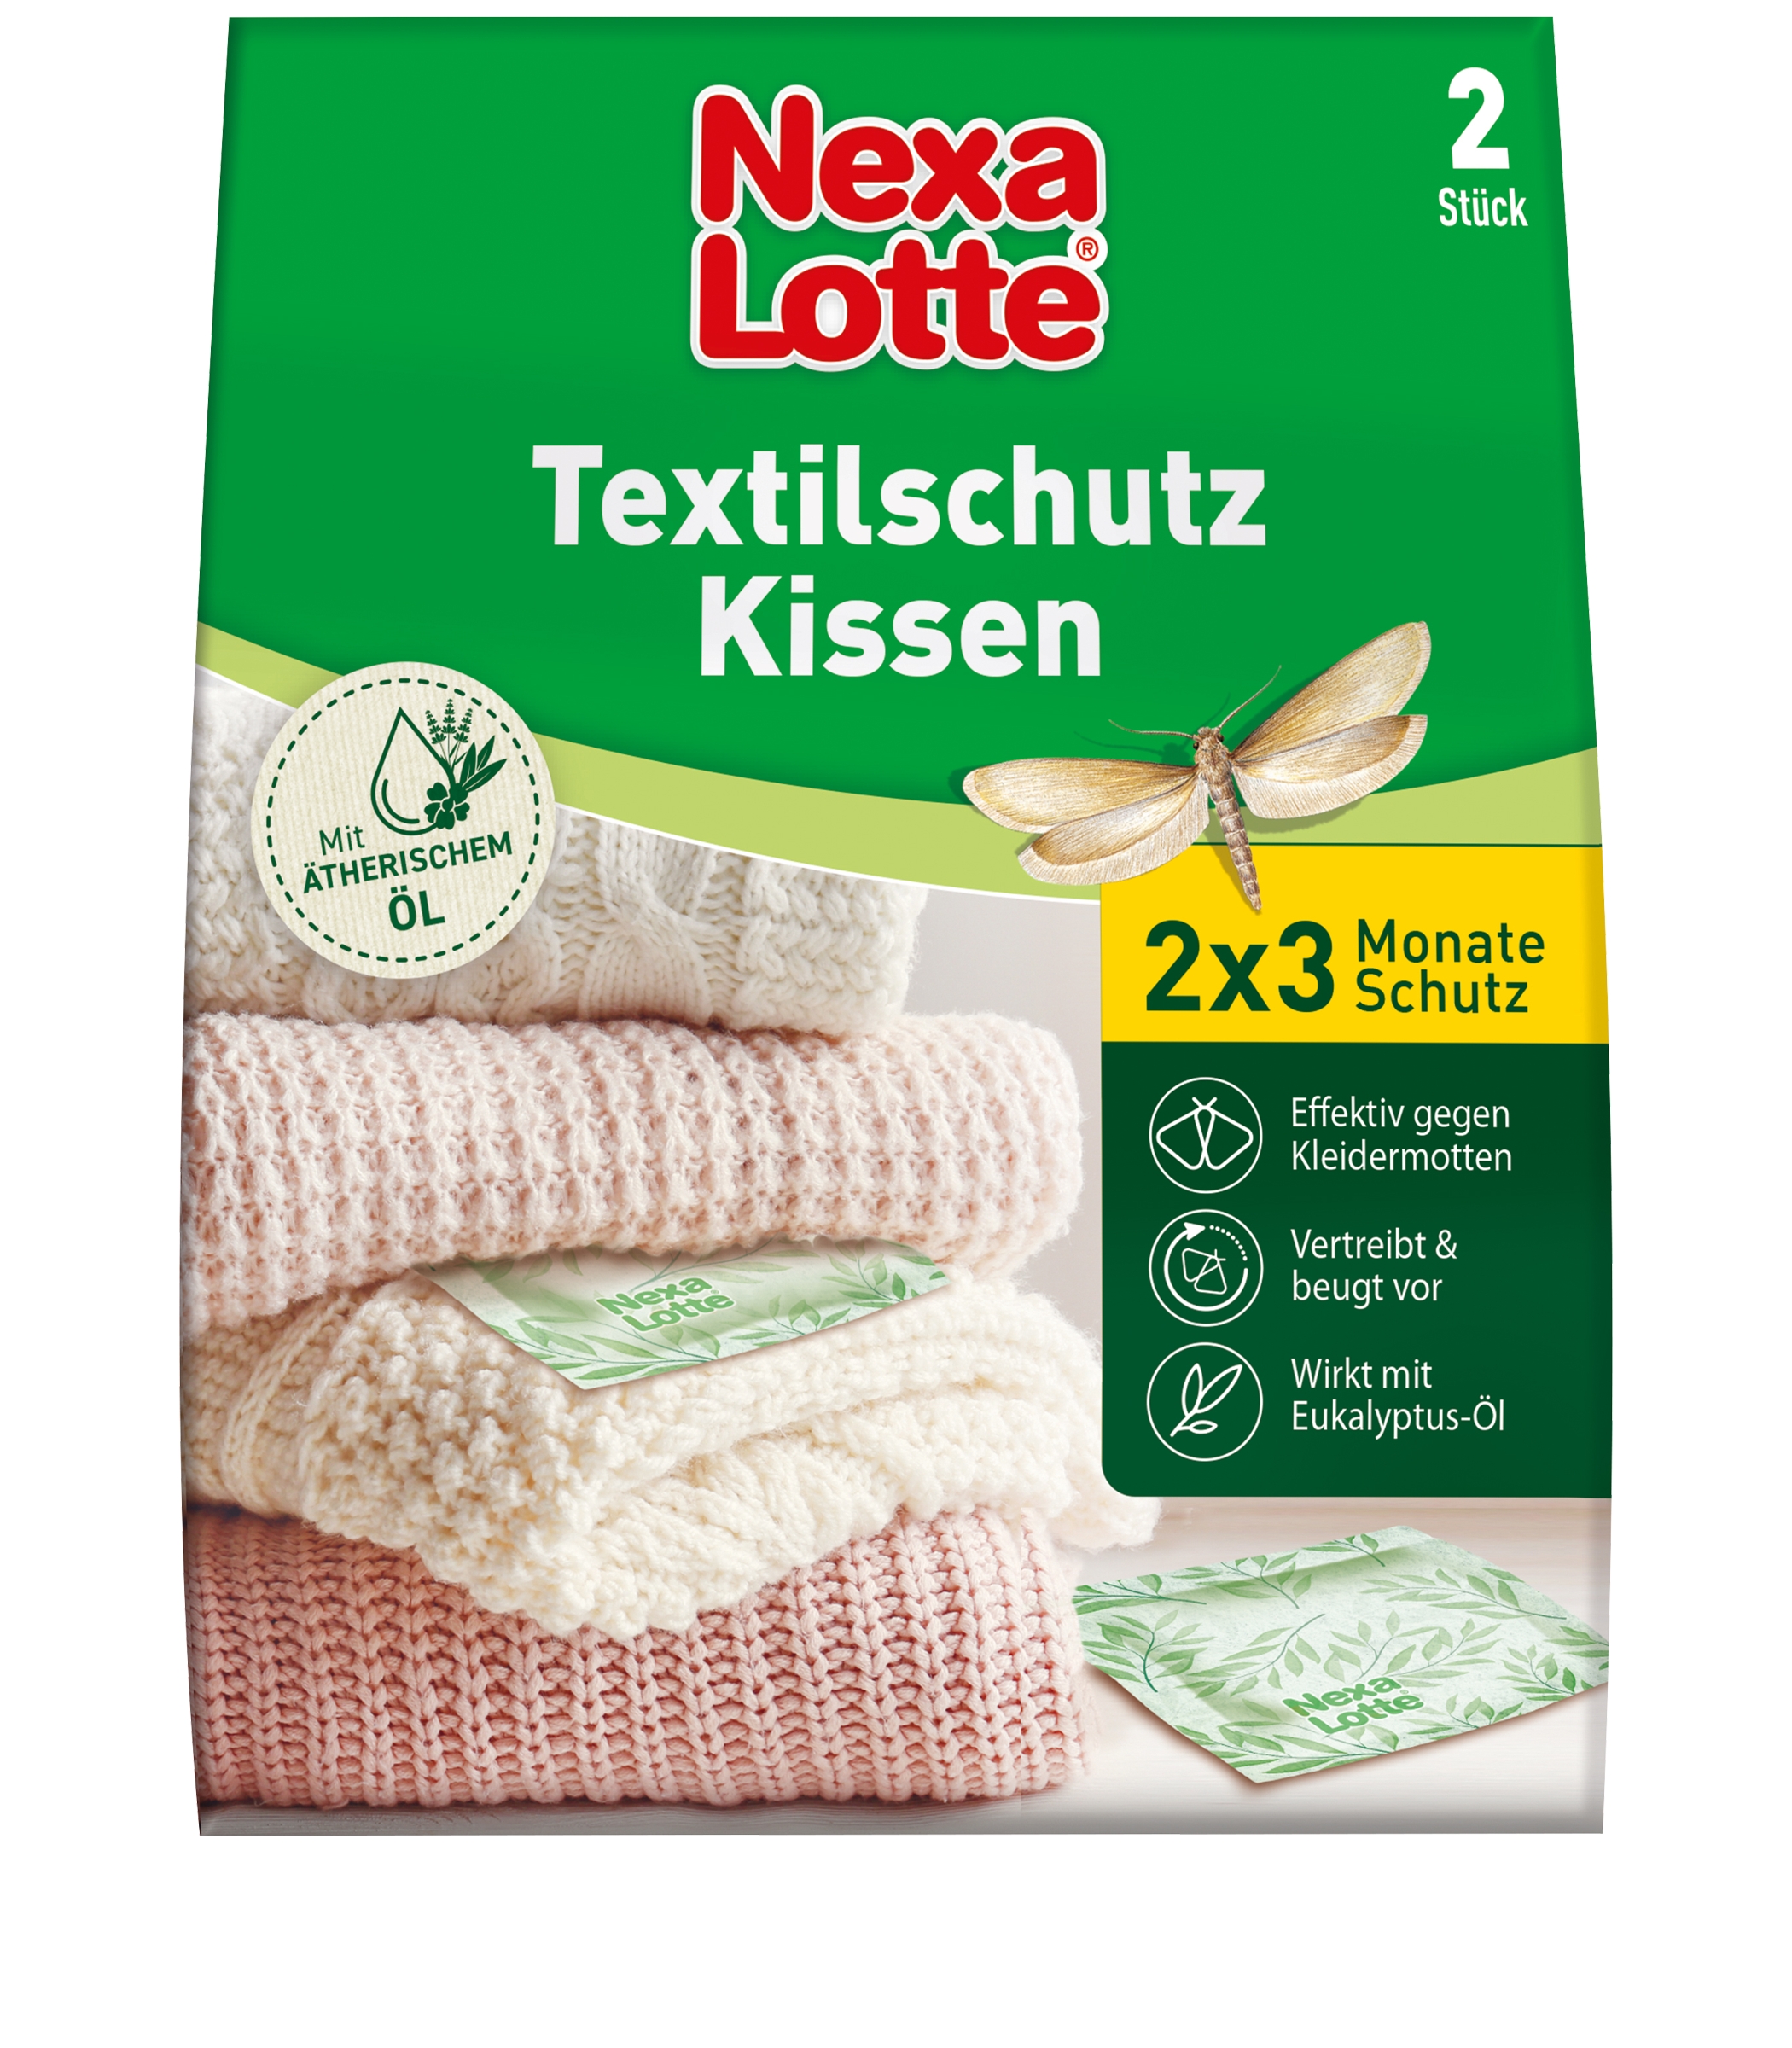 Nexa Lotte Textilschutzkissen